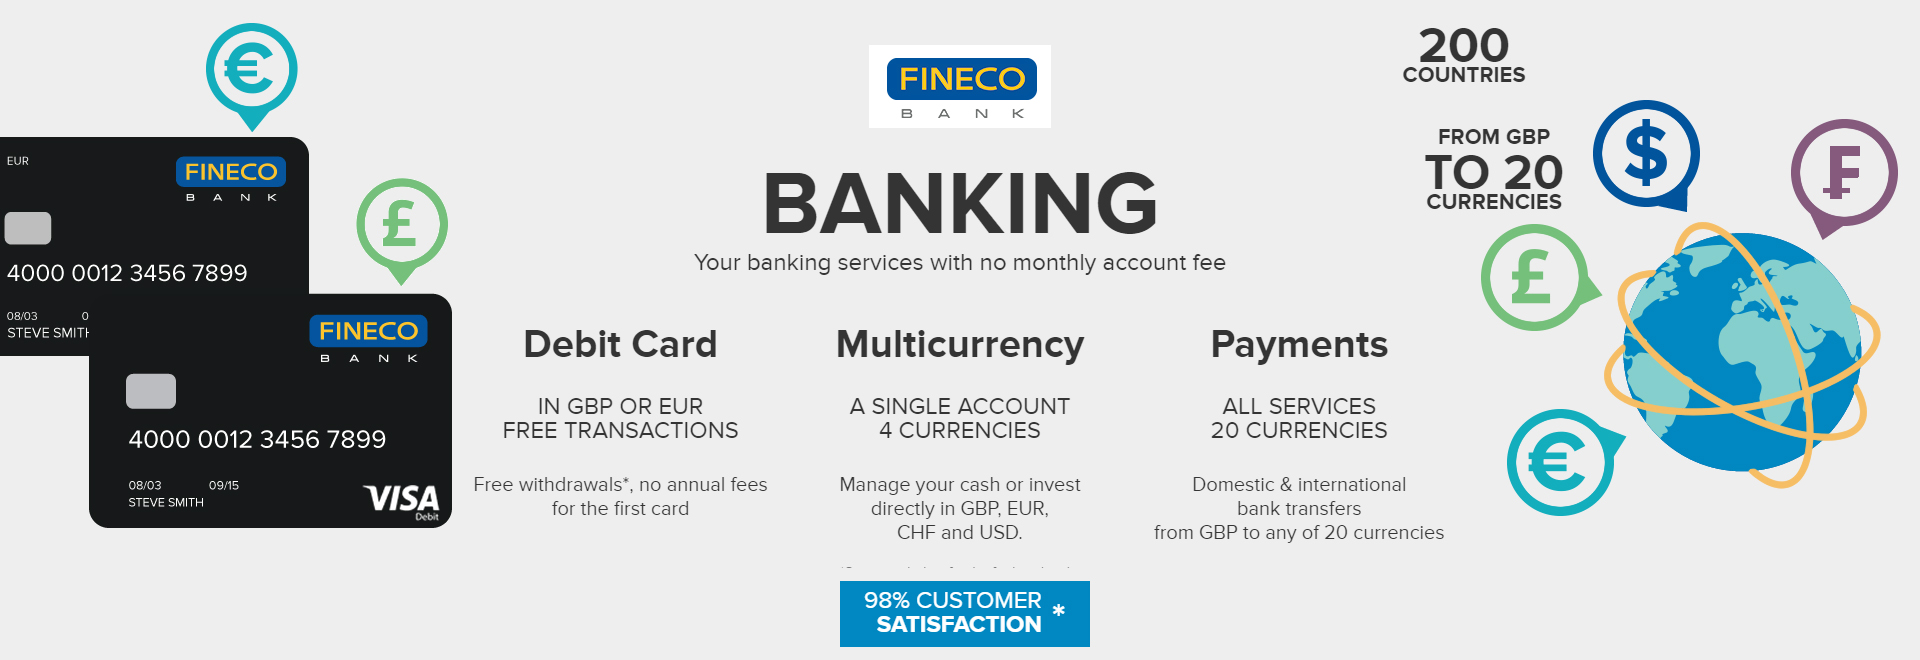 Fineco Bank UK services